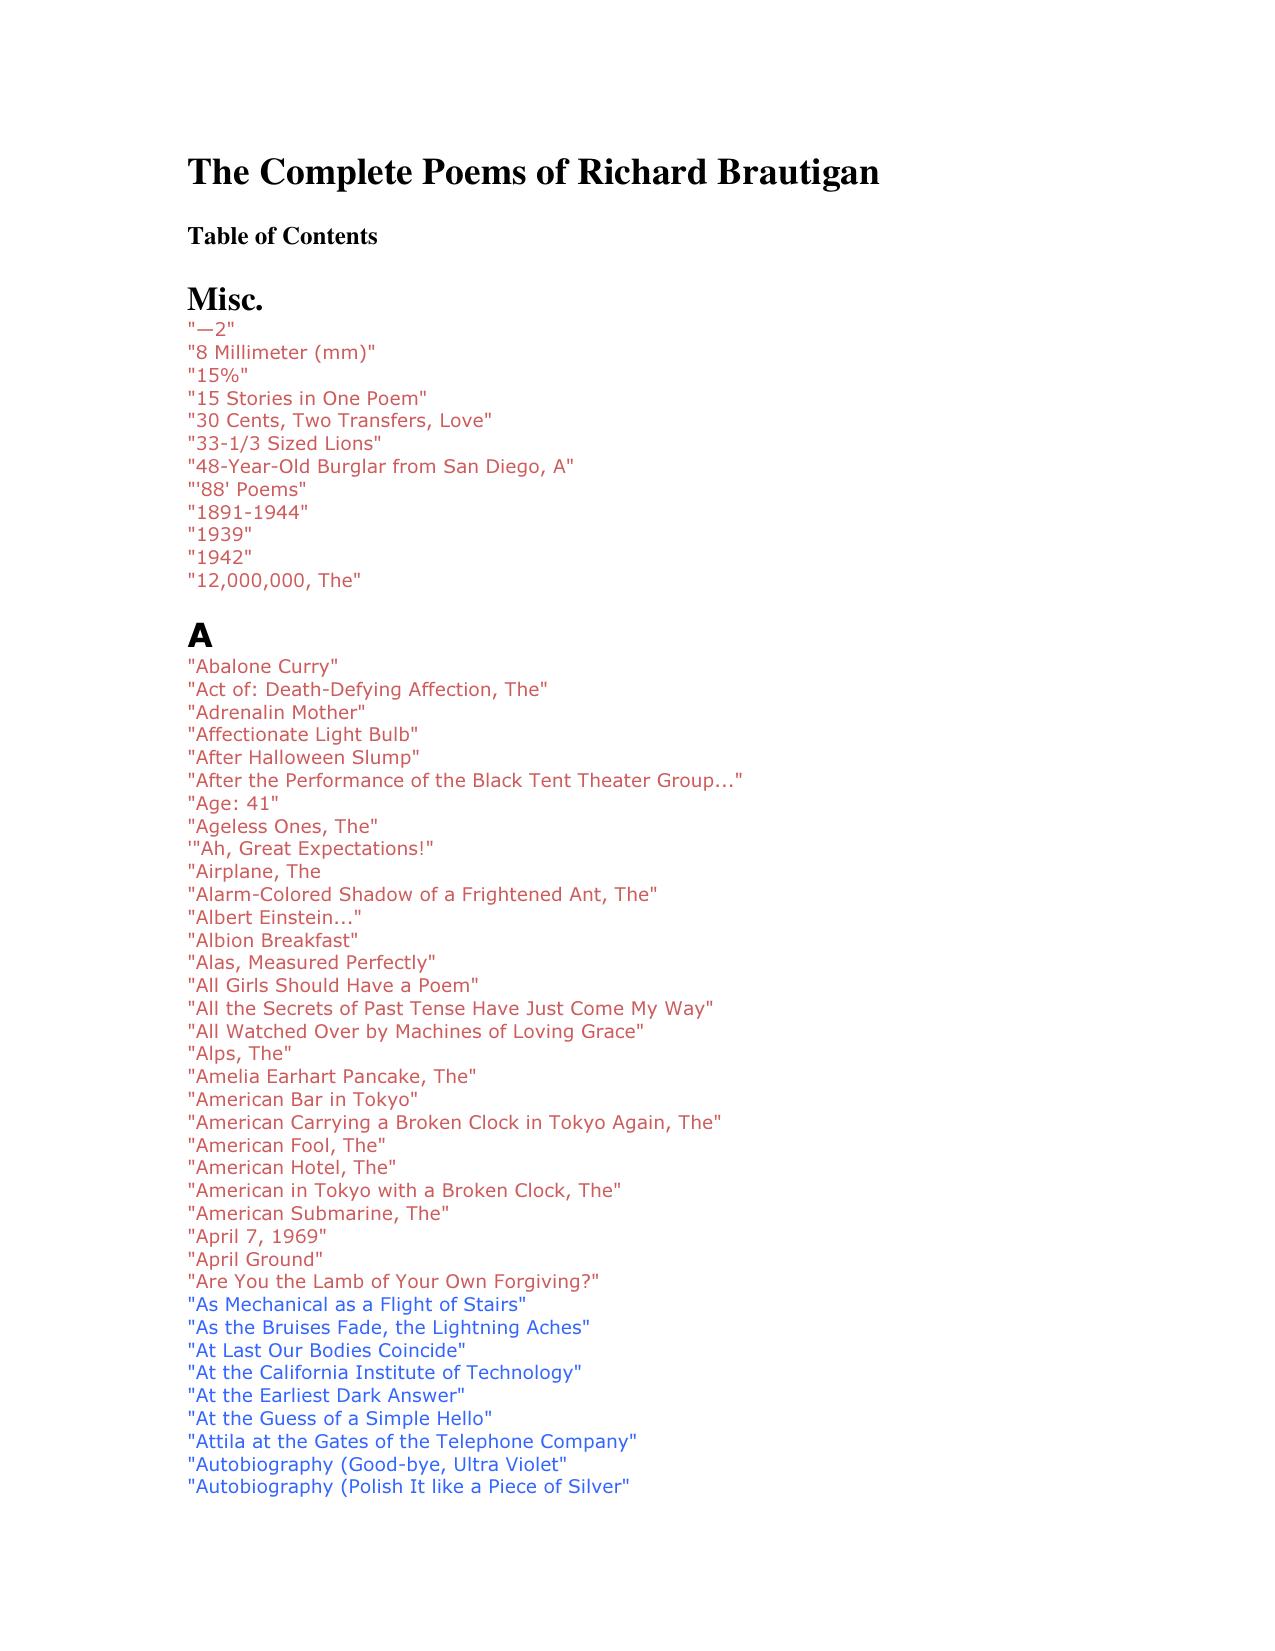 A-Z Poems of Richard Brautigan by Richard Brautigan